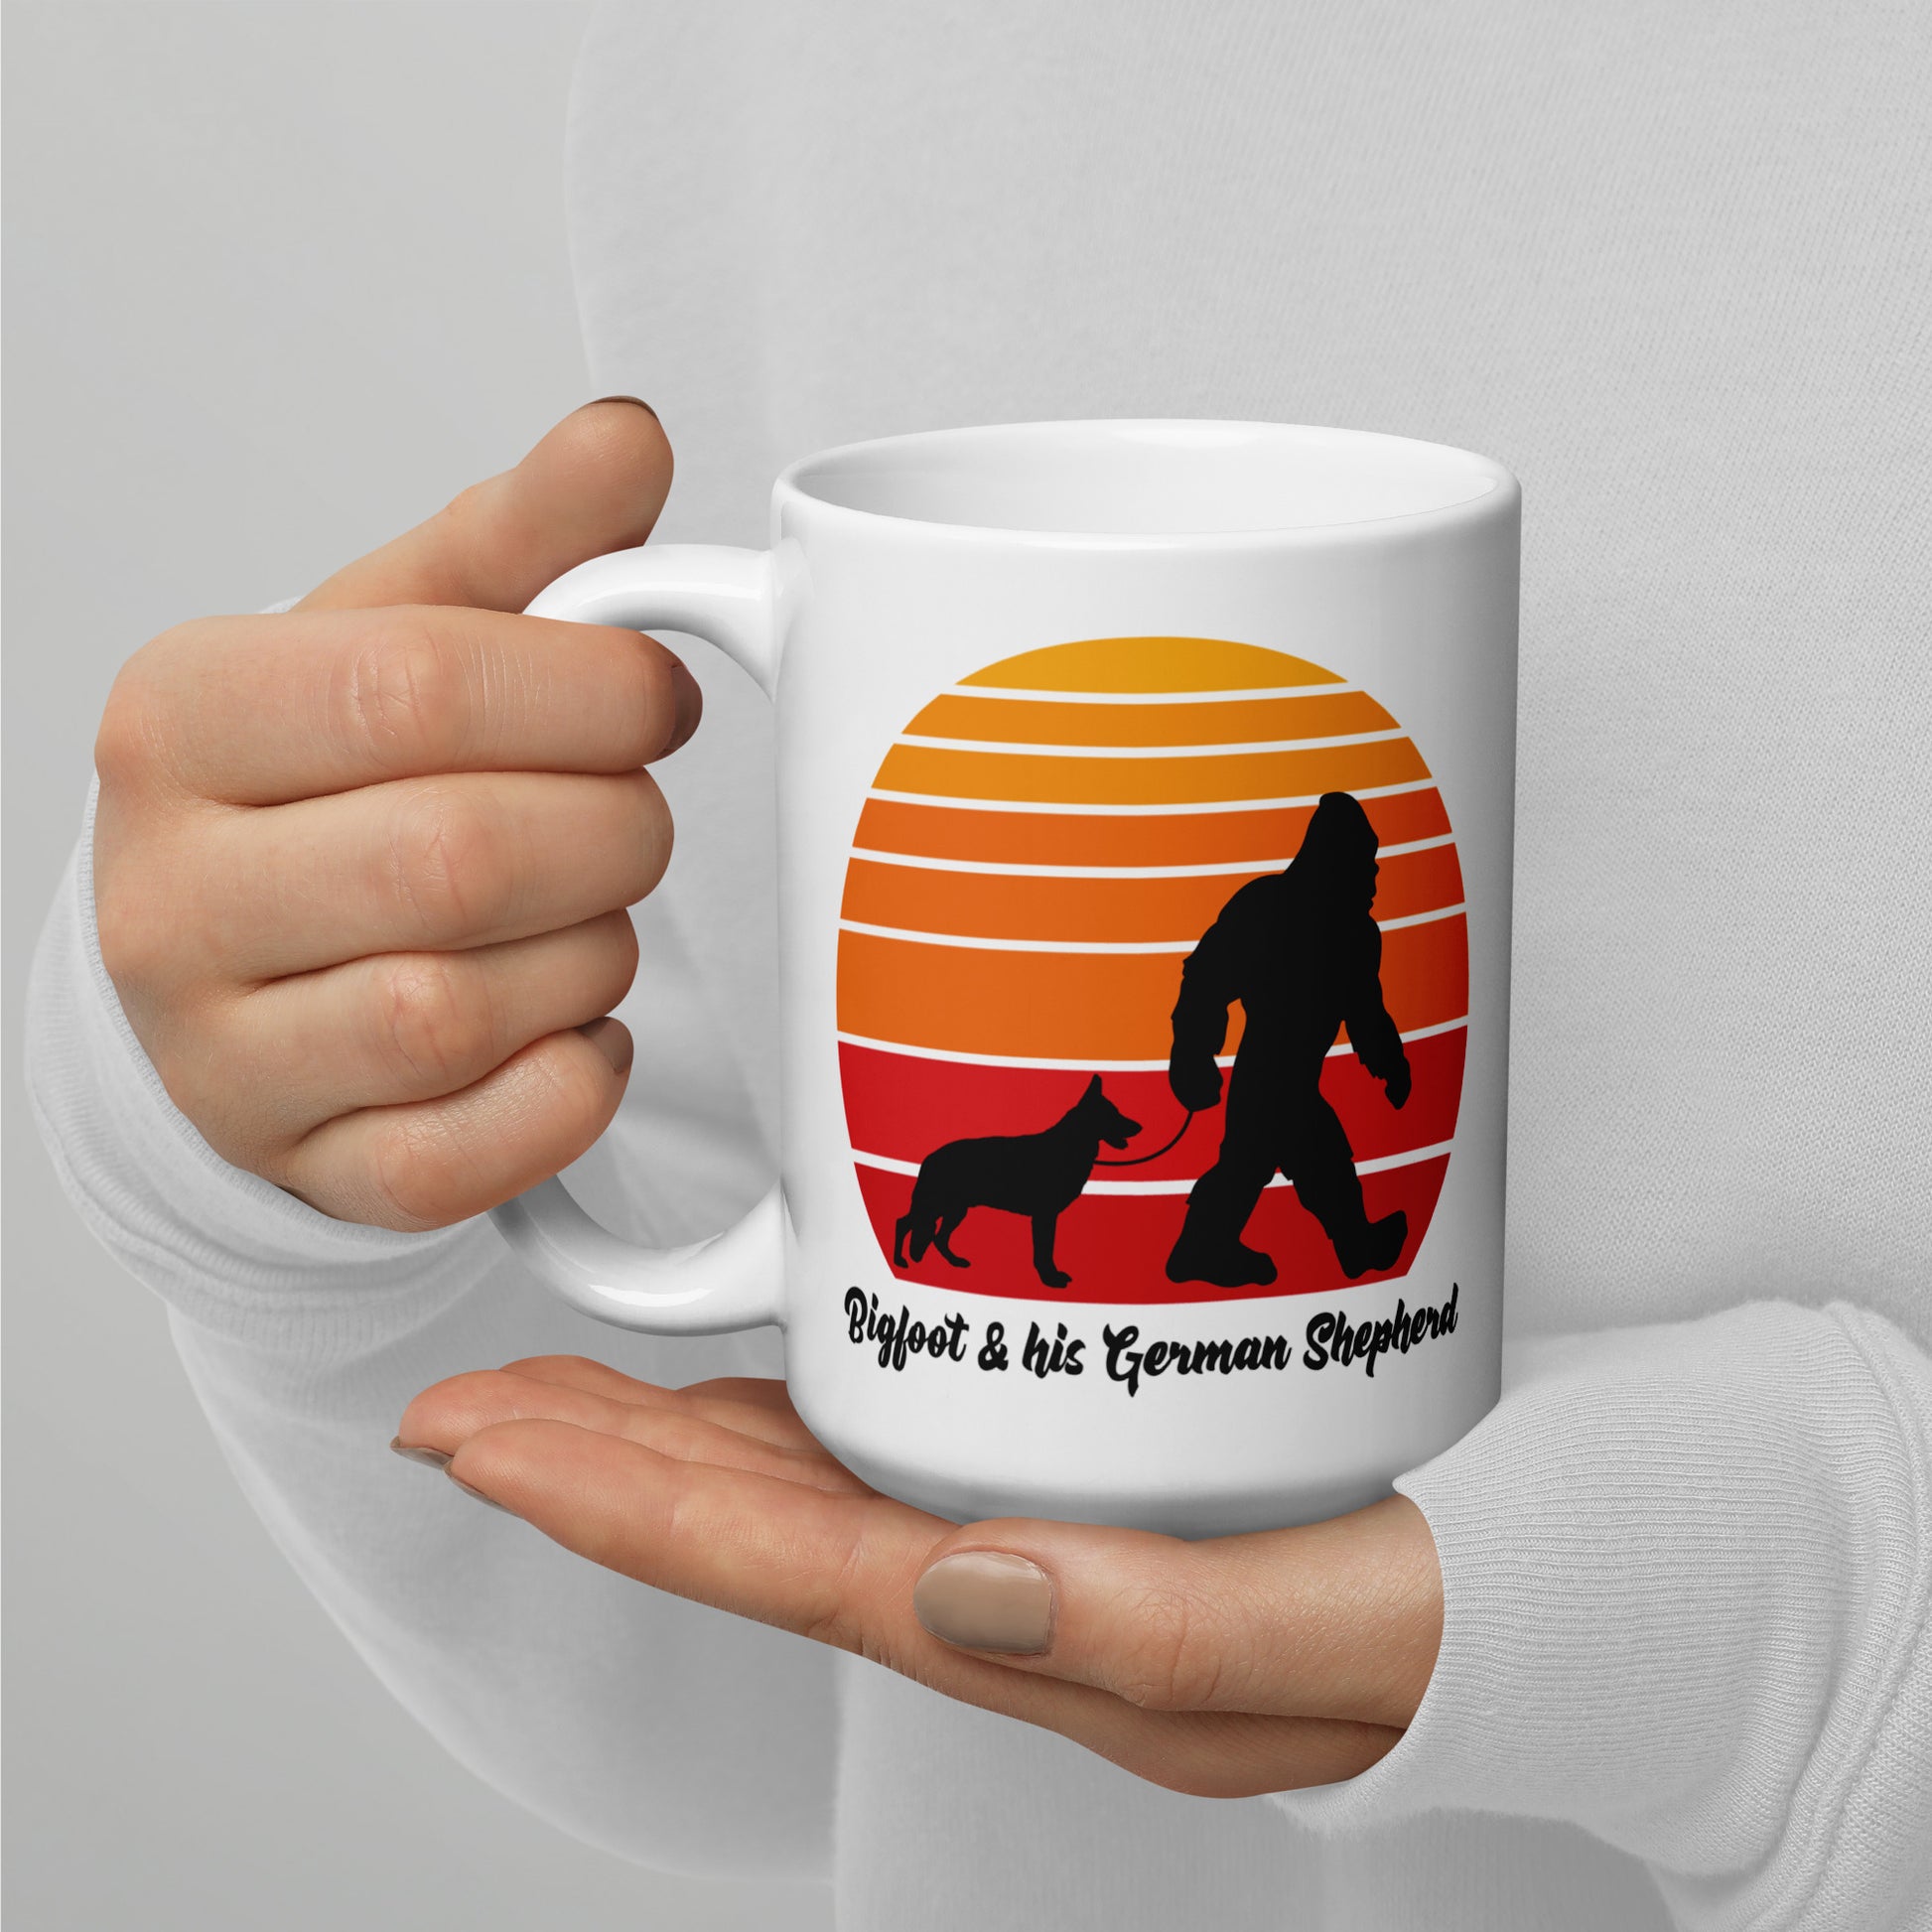 Bigfoot and his German Shepherd mug by Dog Artistry.